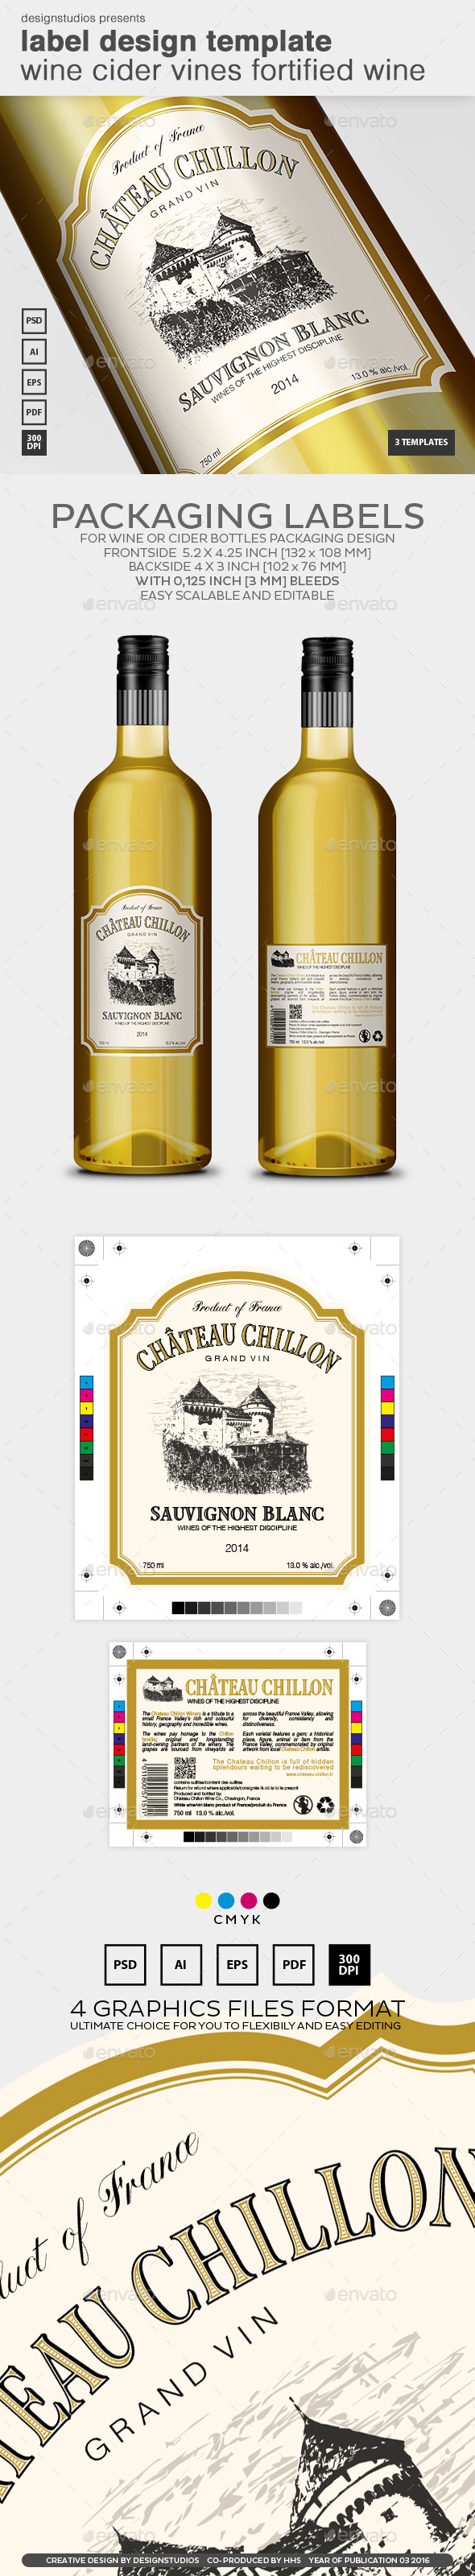 Label Design Template Wine Cider Vines Fortified Wine Intended For Wine Bottle Label Design Template